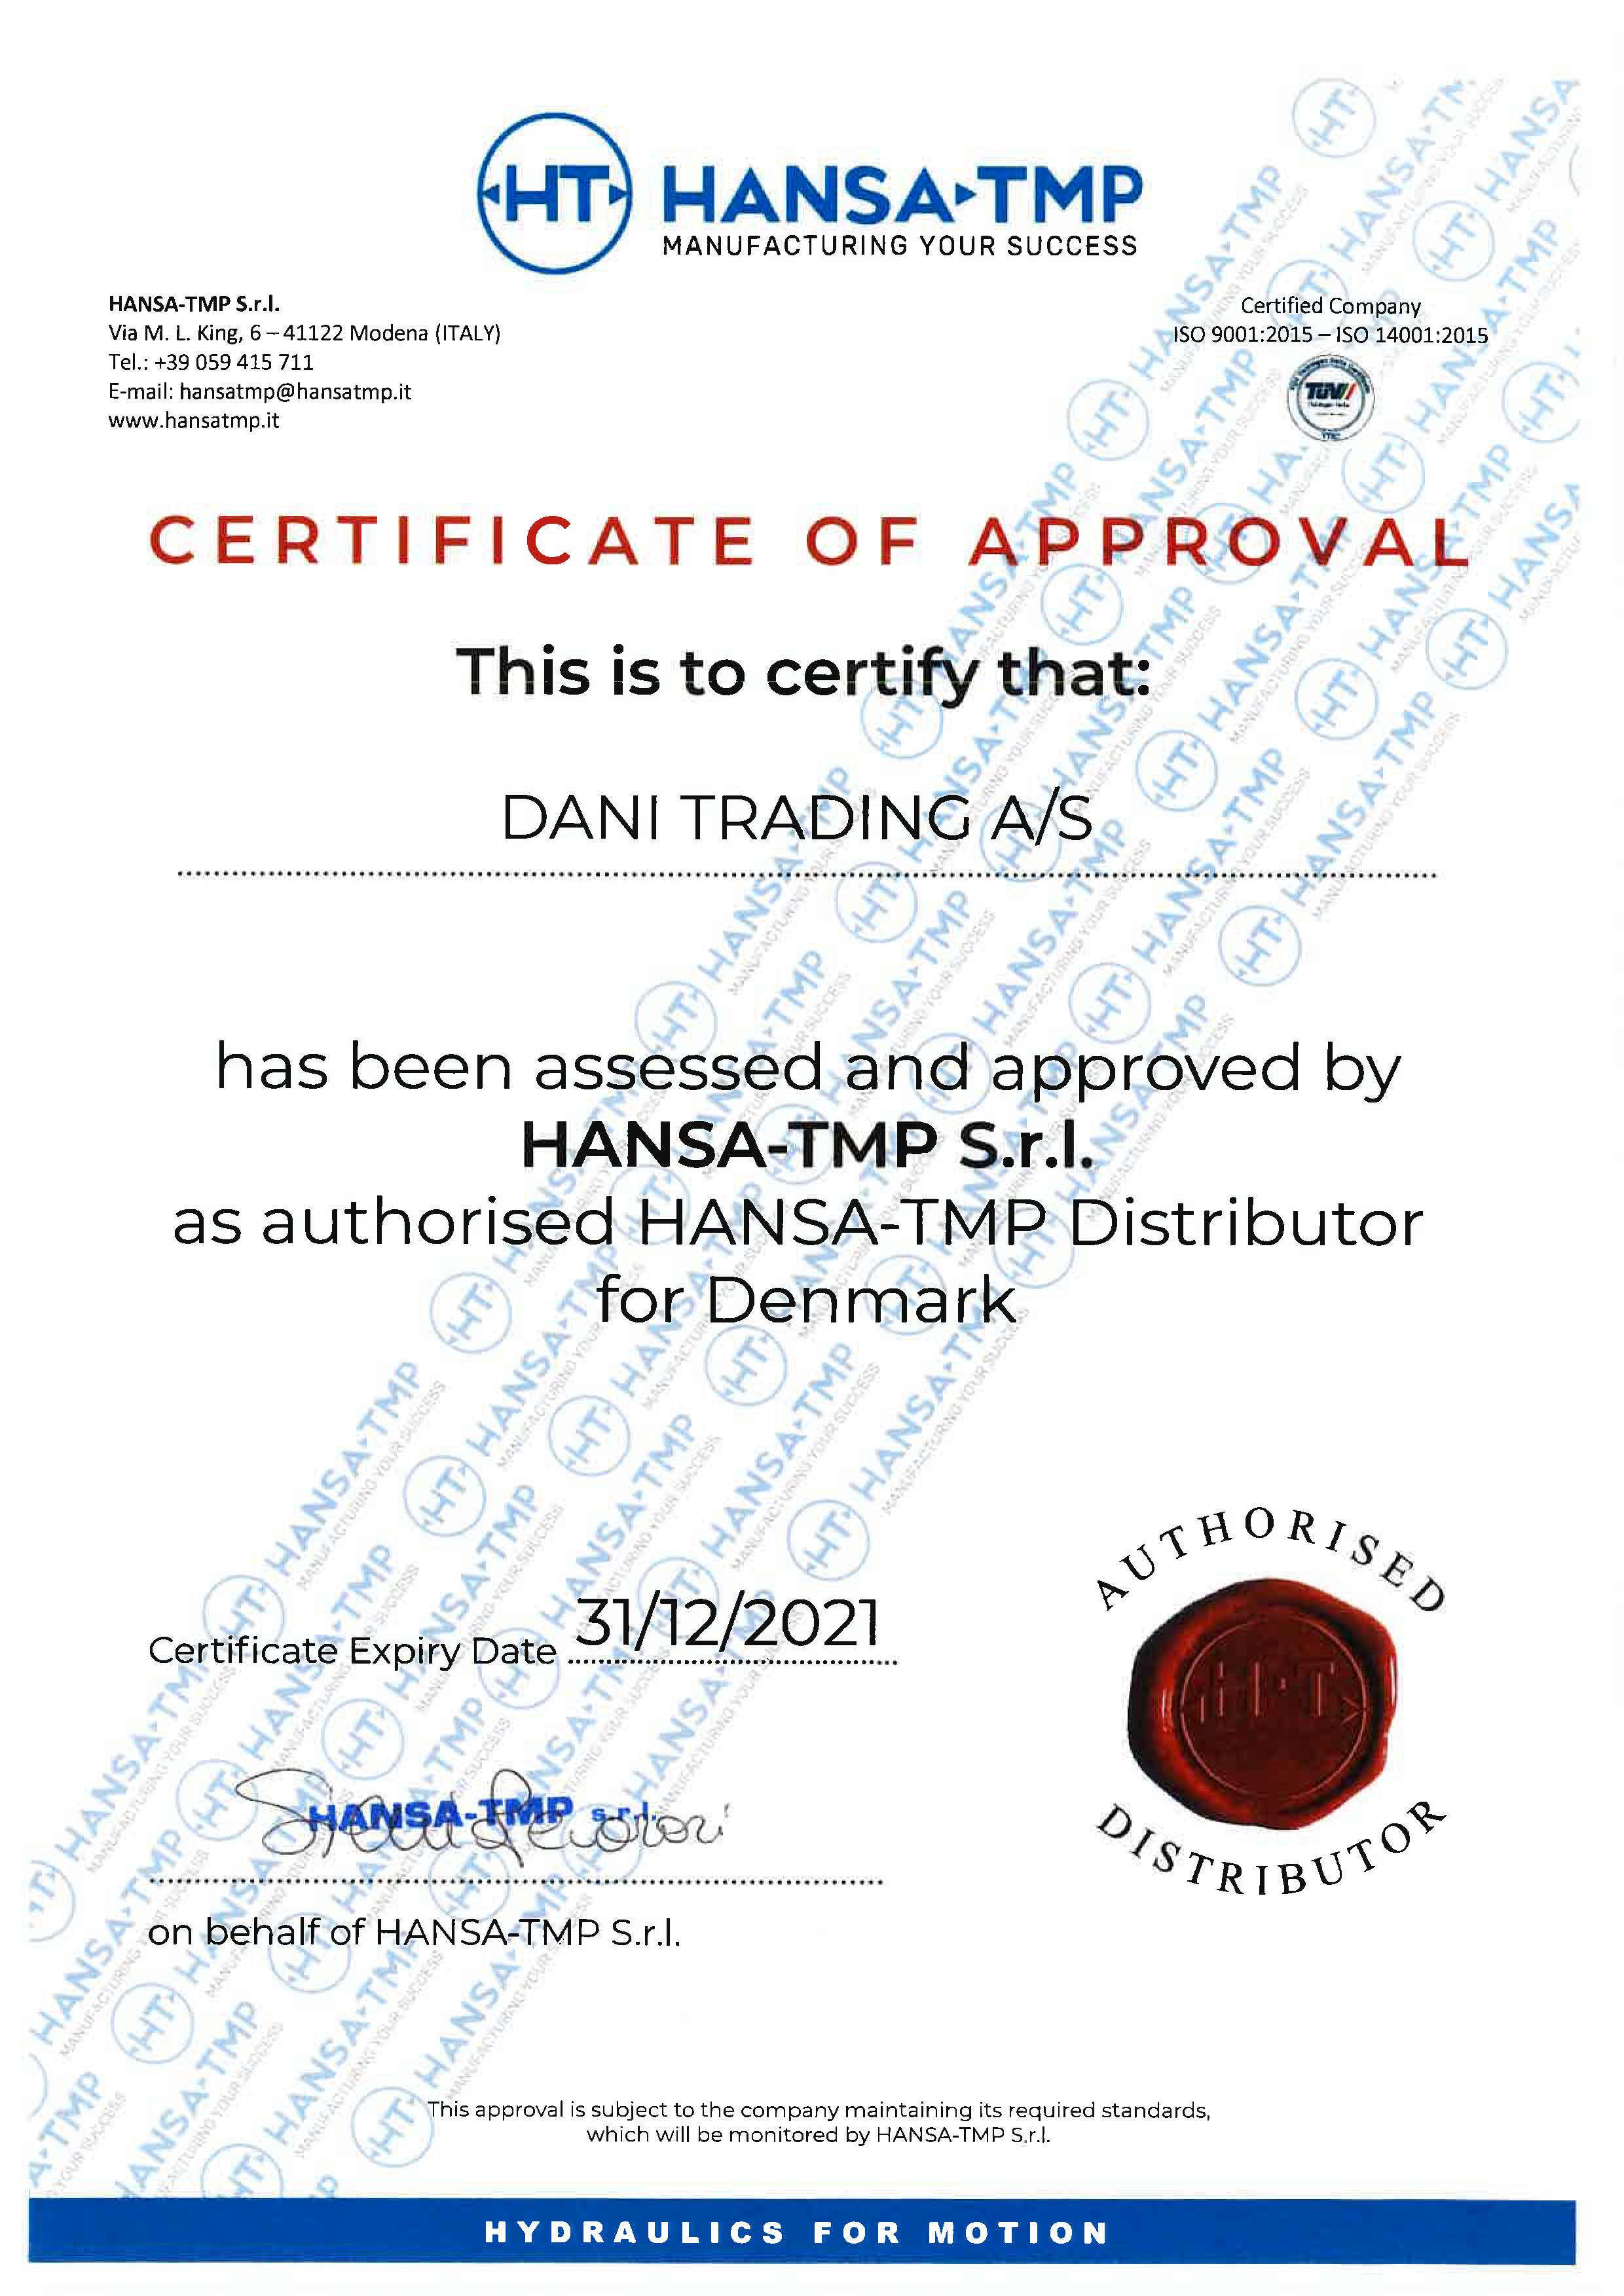 HANSA-TMP - Dani Trading Distributor Certificate - Denmark